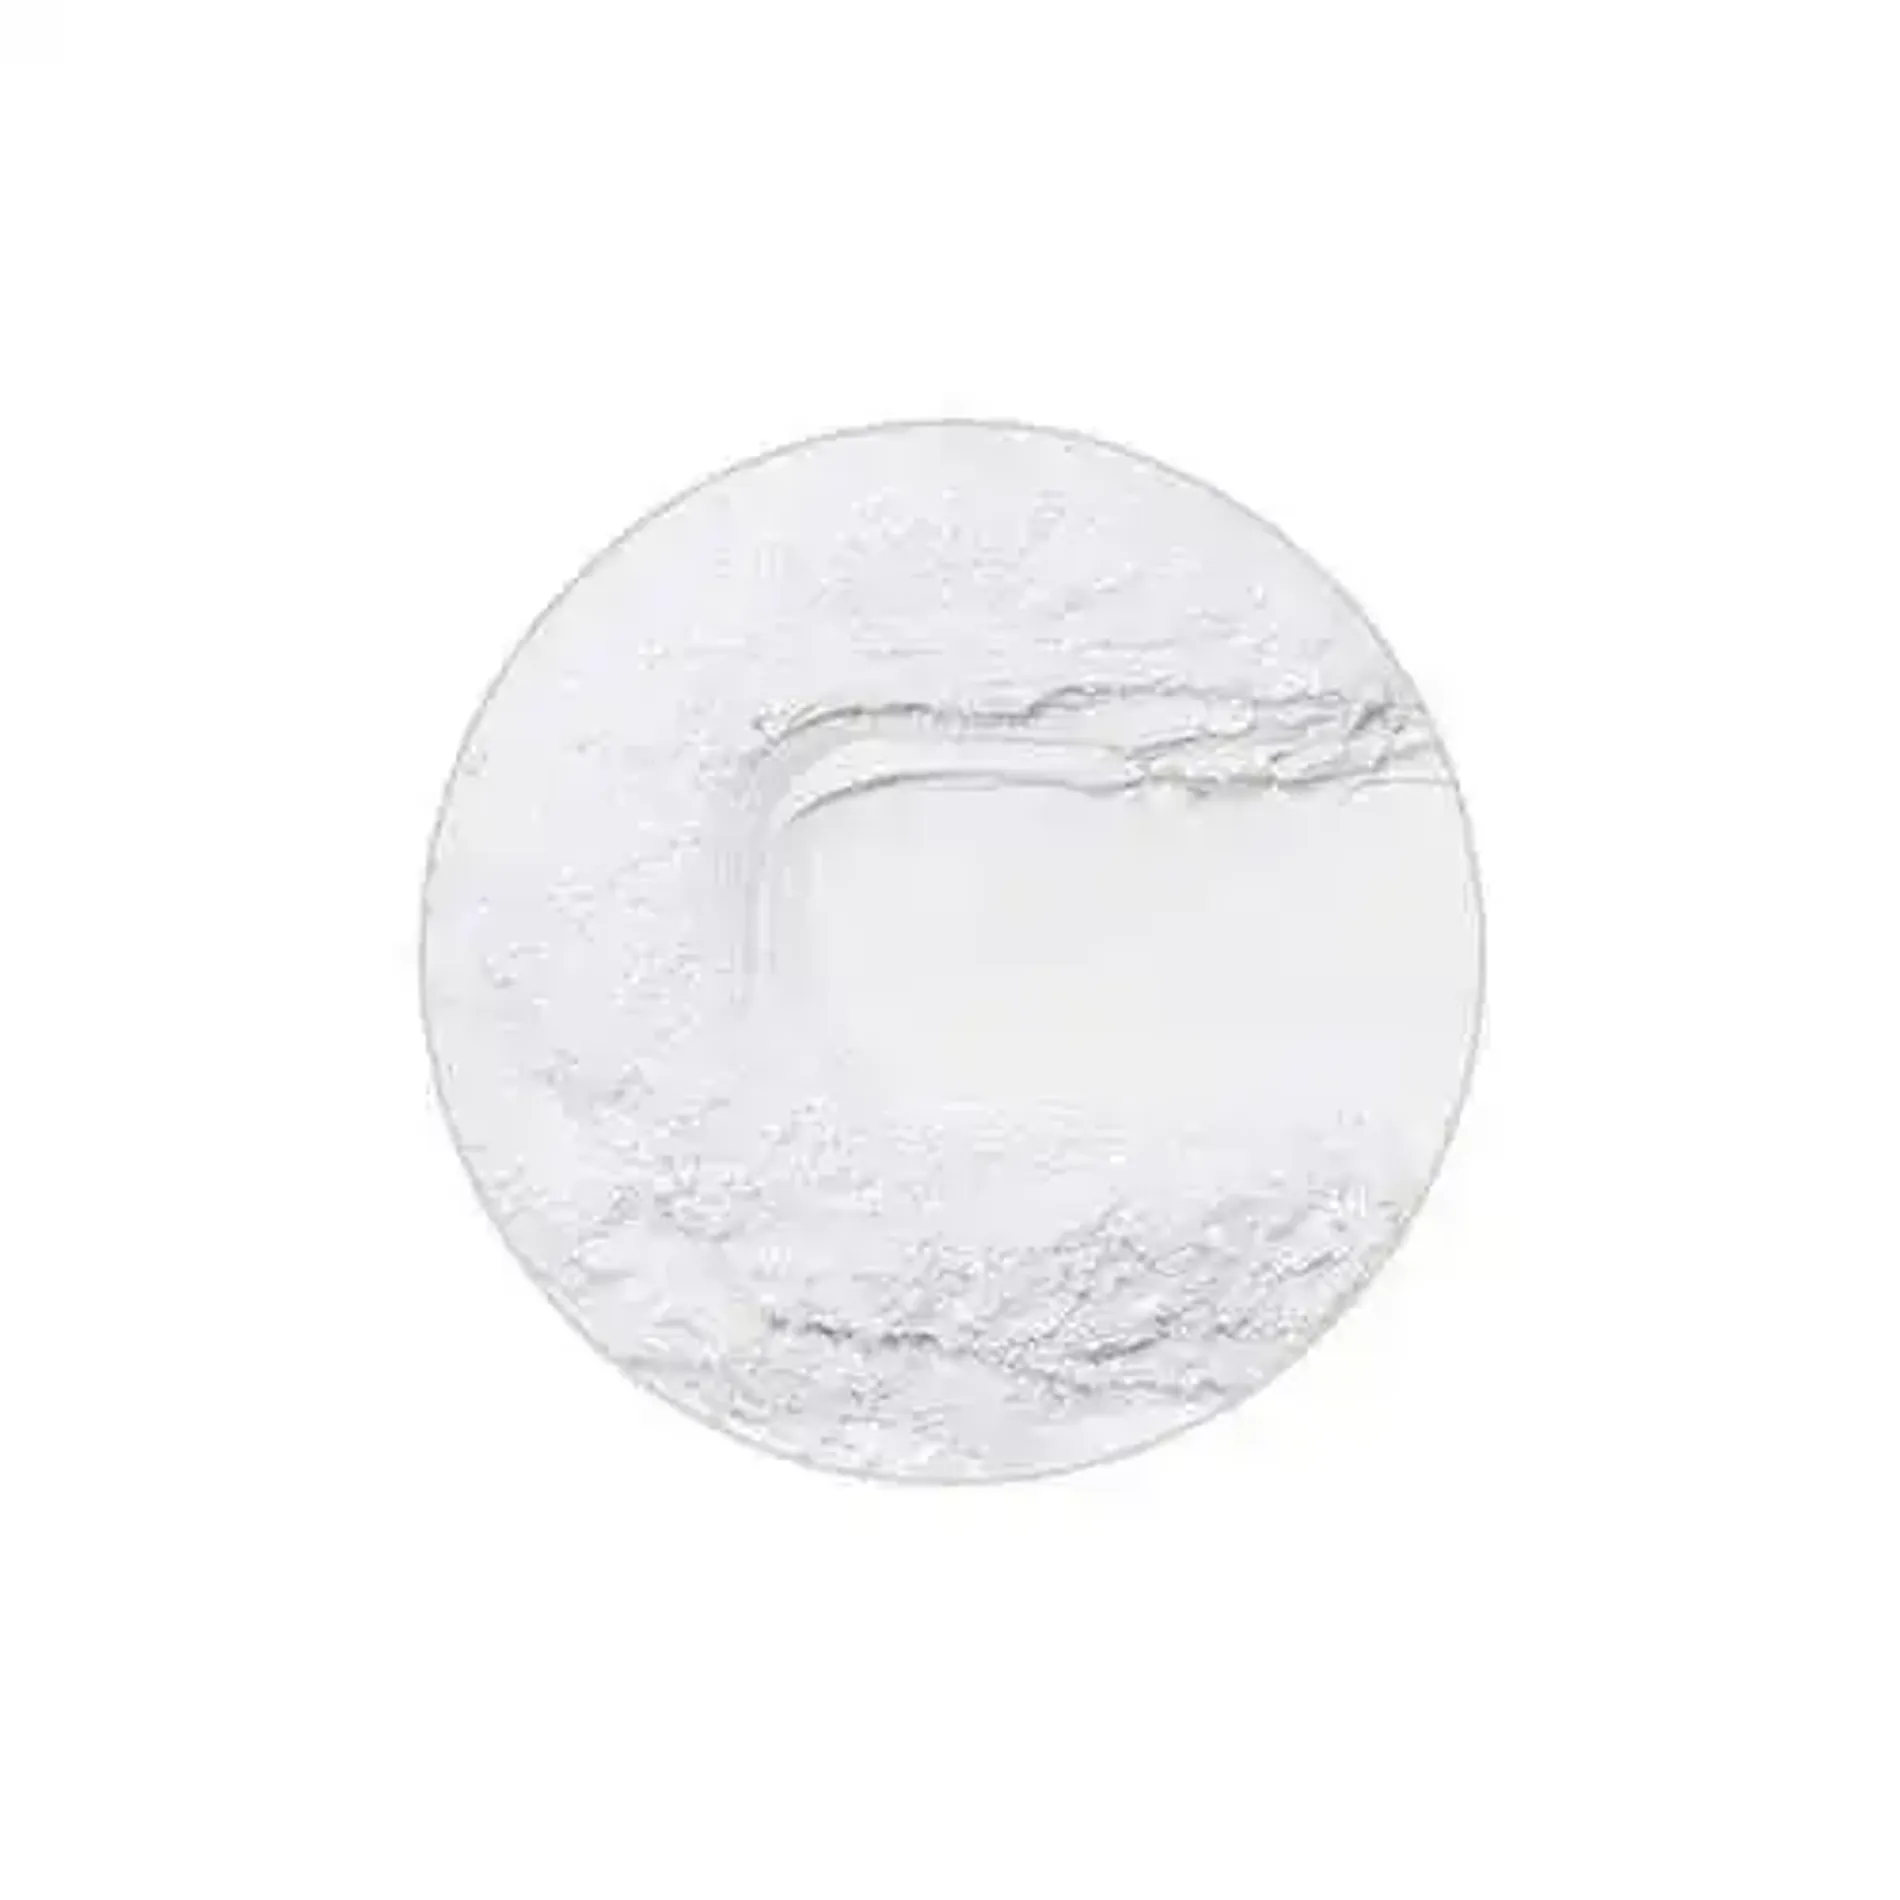 phan-phu-trong-suot-a-pieu-mineral-100-hd-powder-5-5g-2